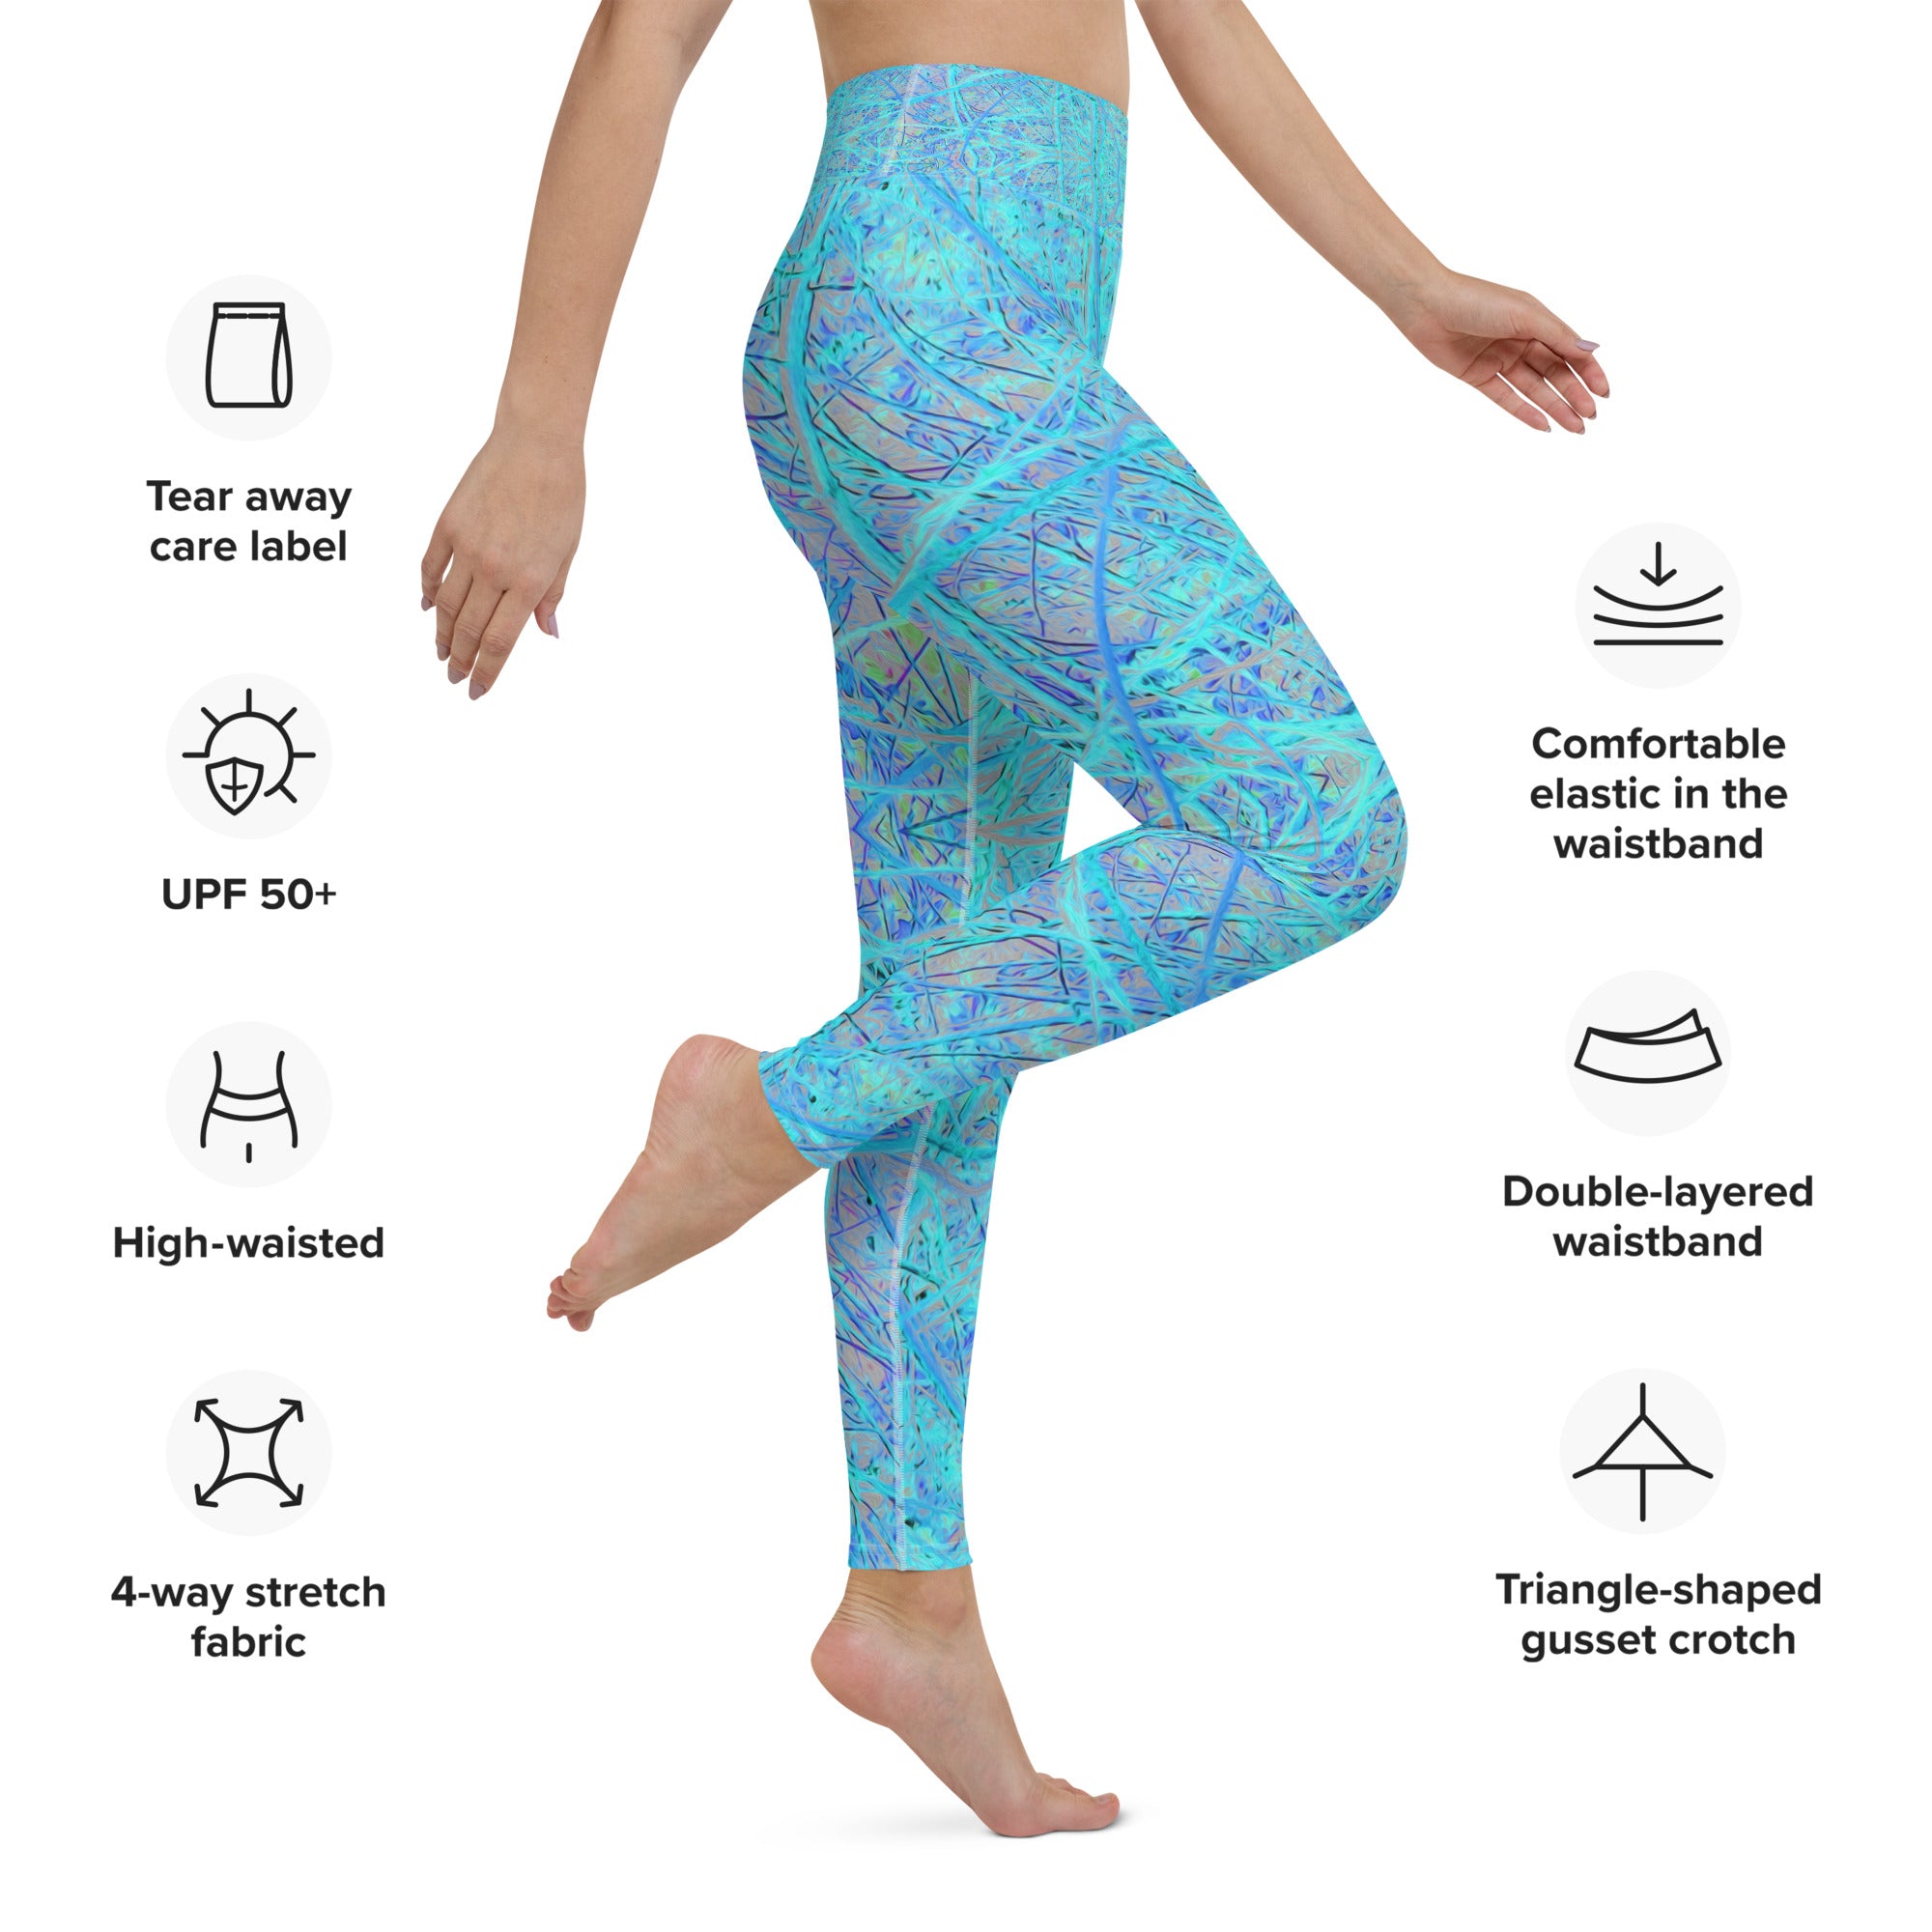 Yoga Leggings for Women - Cool Aqua Blue Abstract Branch Pattern